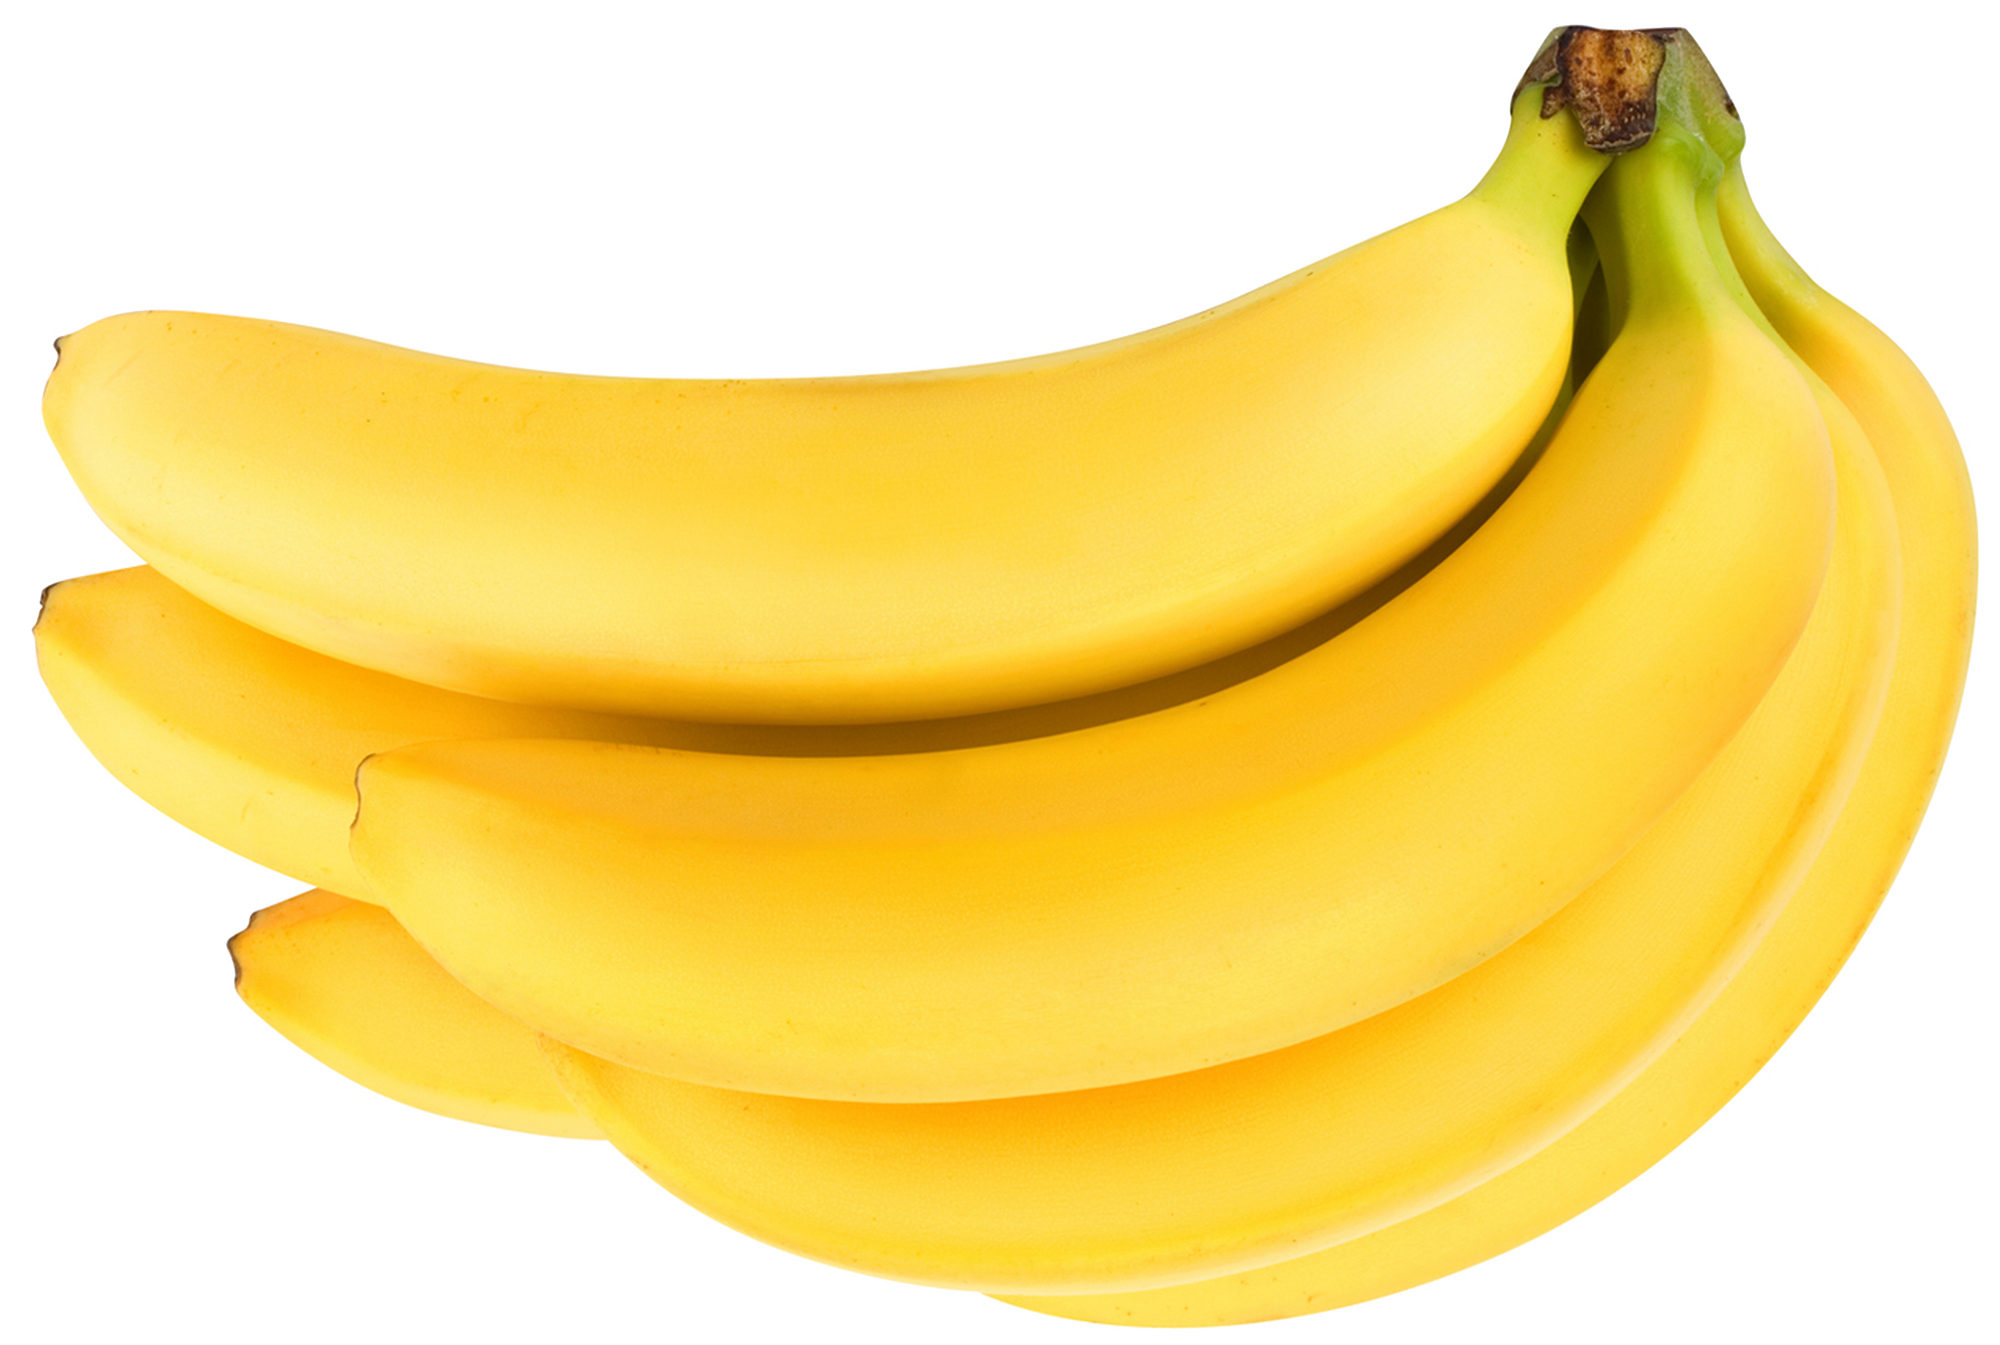 Banana PNG Transparent Images - PNG All